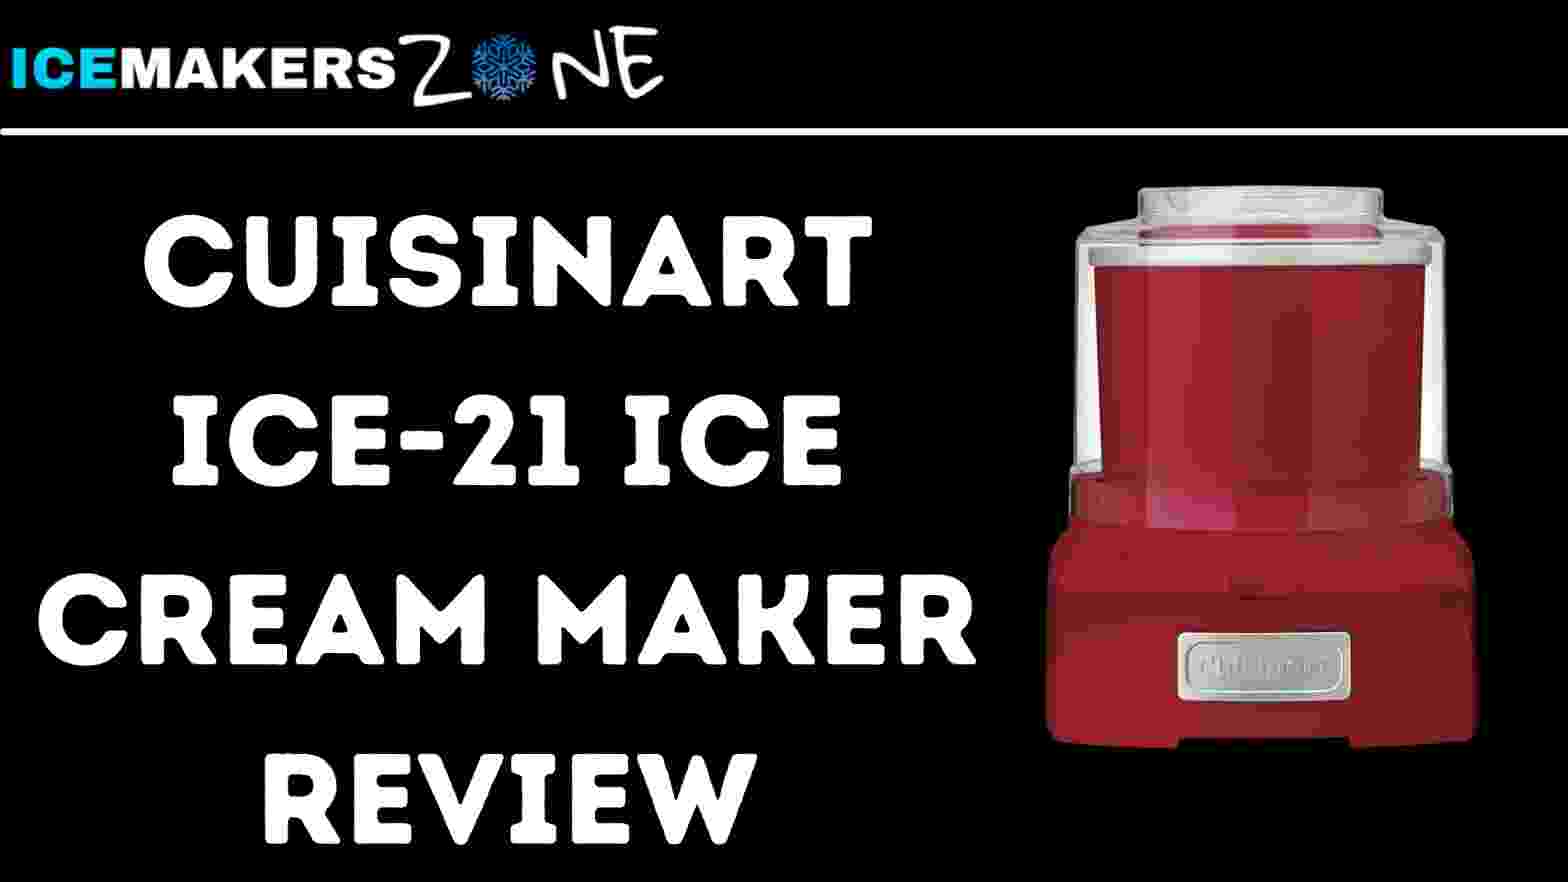 Cuisinart ICE-21 Ice Cream Maker Review